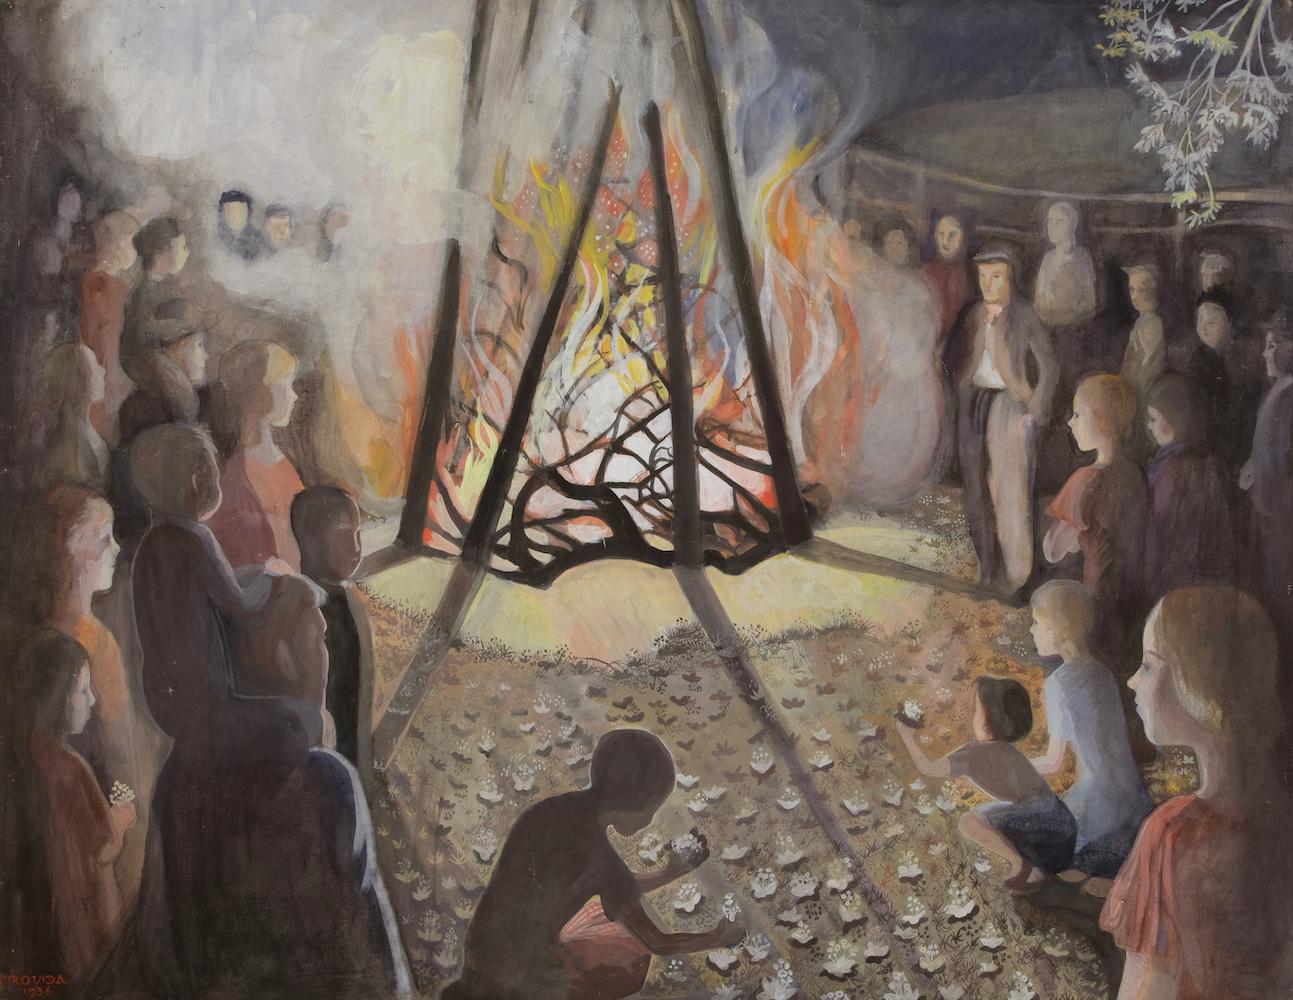 Bonfire, Jubiläumsnacht von Orovida Pissarro – Ei tempura-Gemälde, 1936